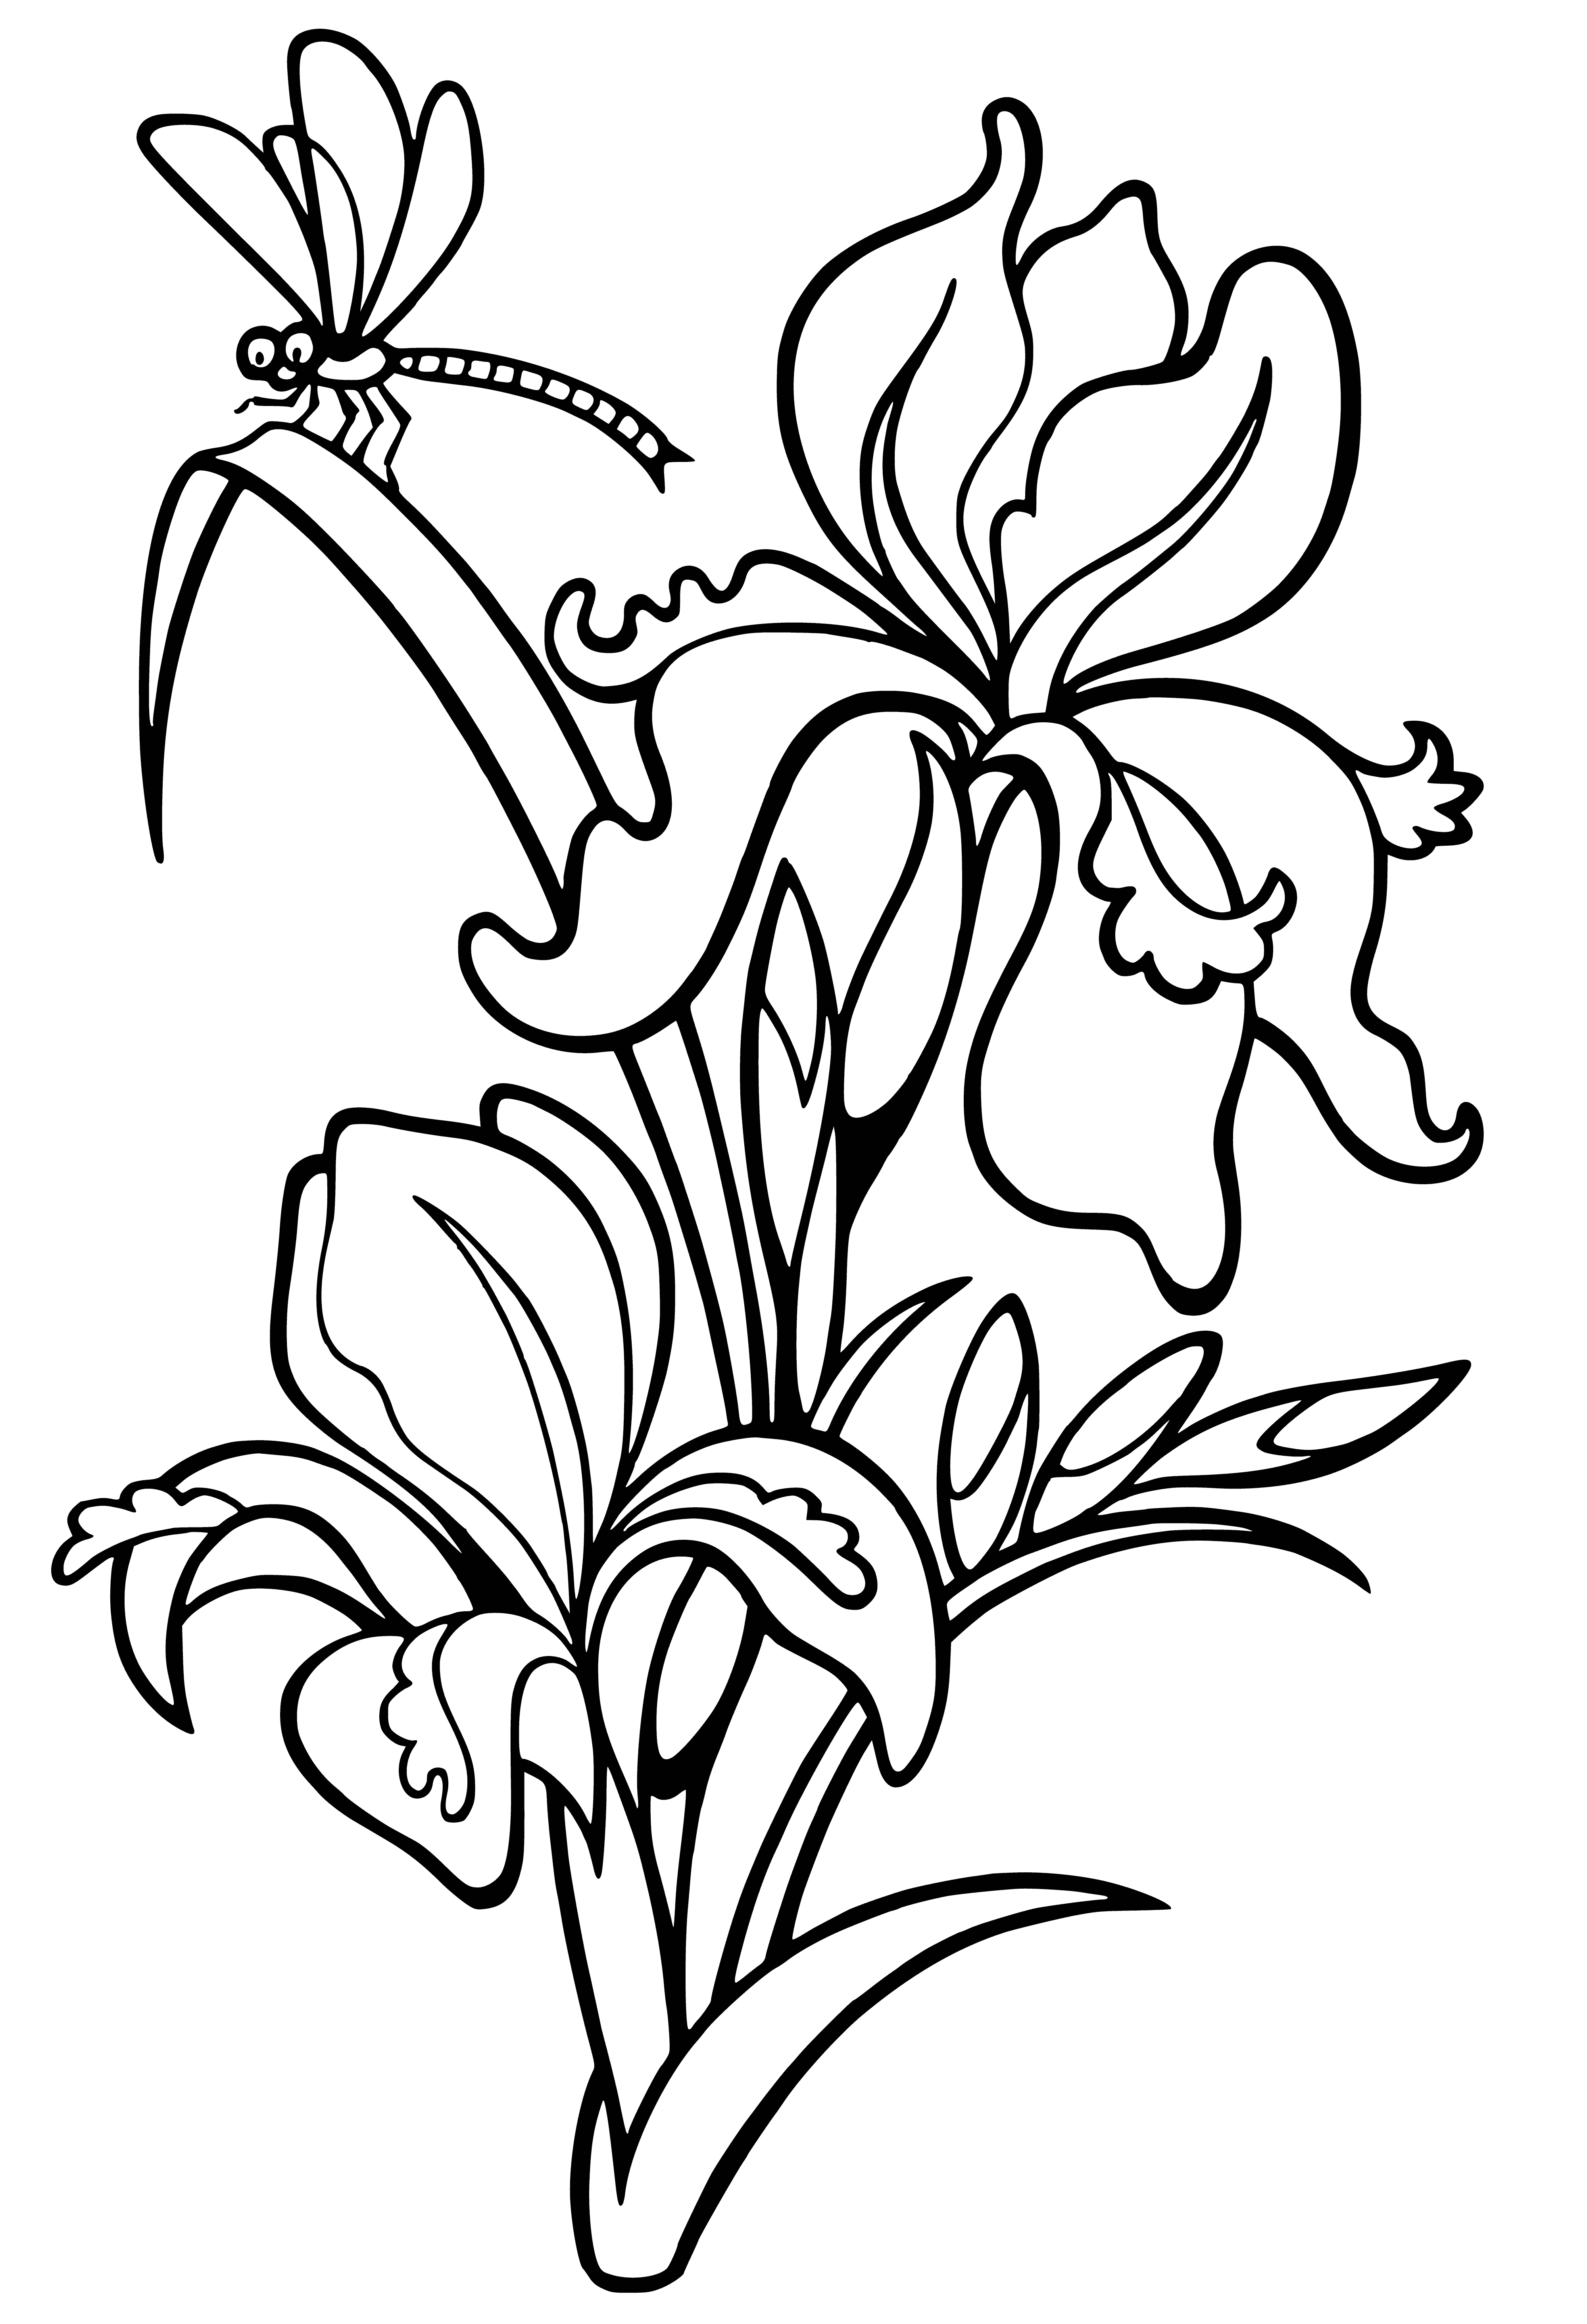 Iris coloring page